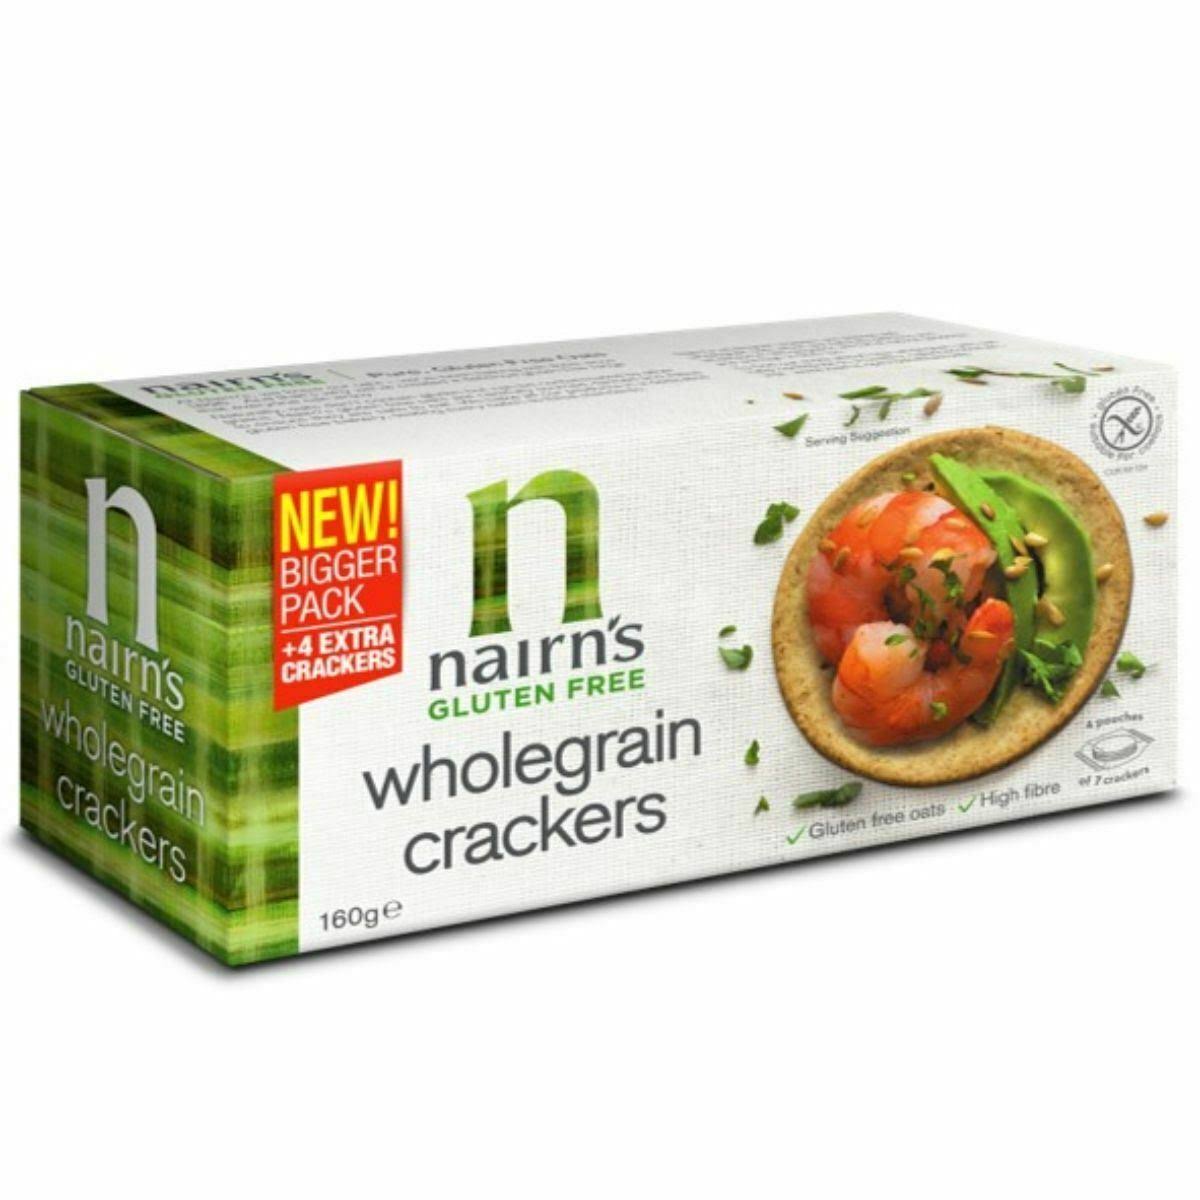 Nairns Gluten Free Whole Grain Crackers - 160g